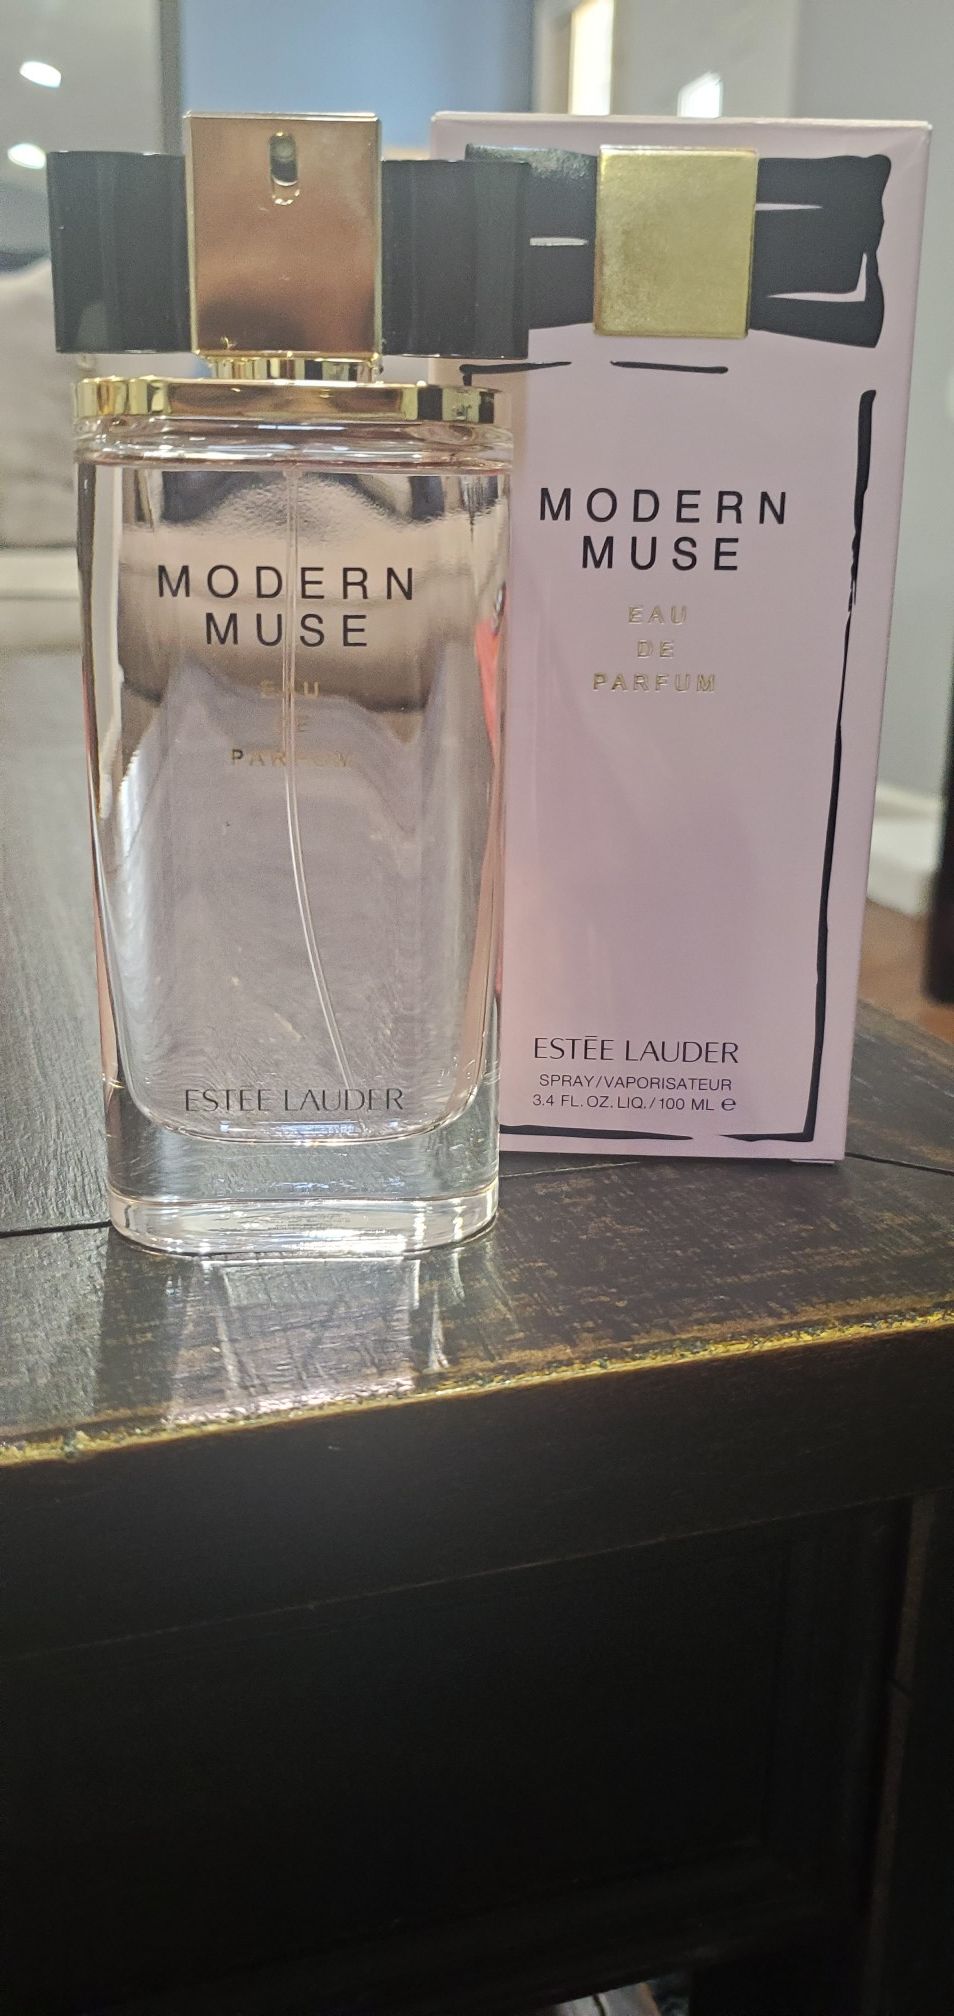 Estee lauder modern muse perfume